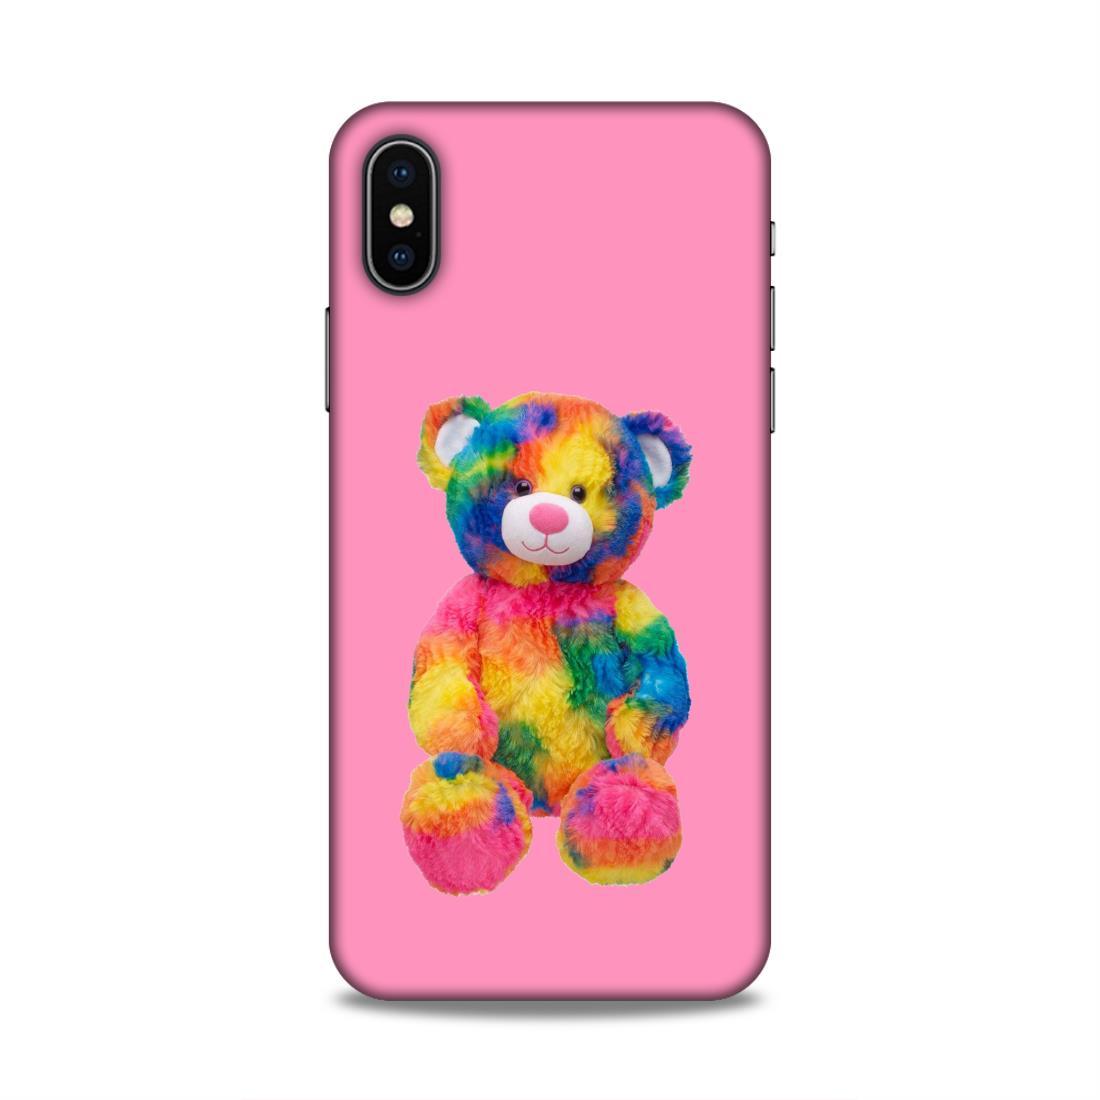 Multicolour Teddy Bear iPhone XS Mobile Case Cover